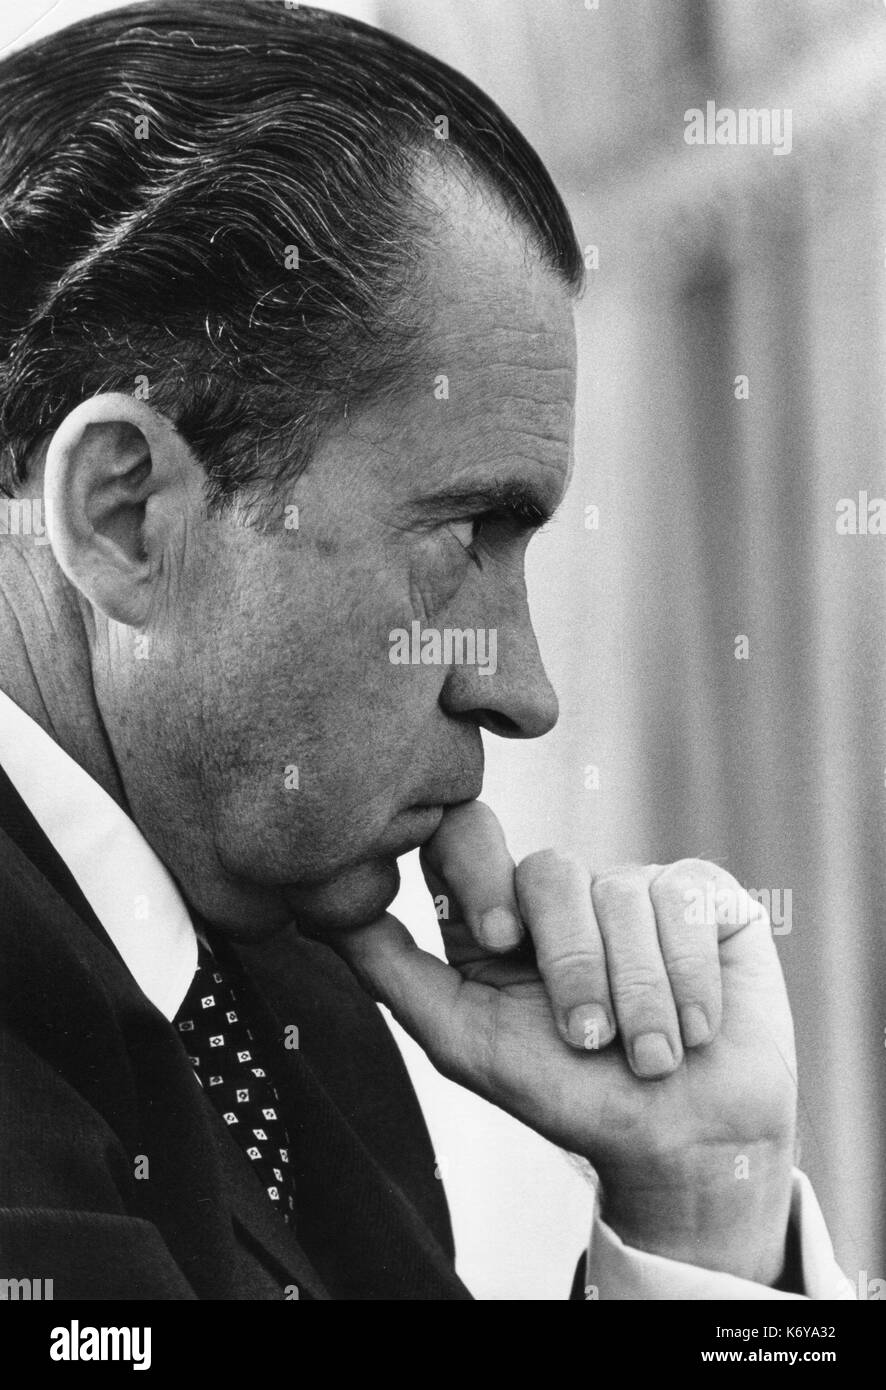 Präsident Nixon. Weißes Haus, 2/19/70. Stockfoto